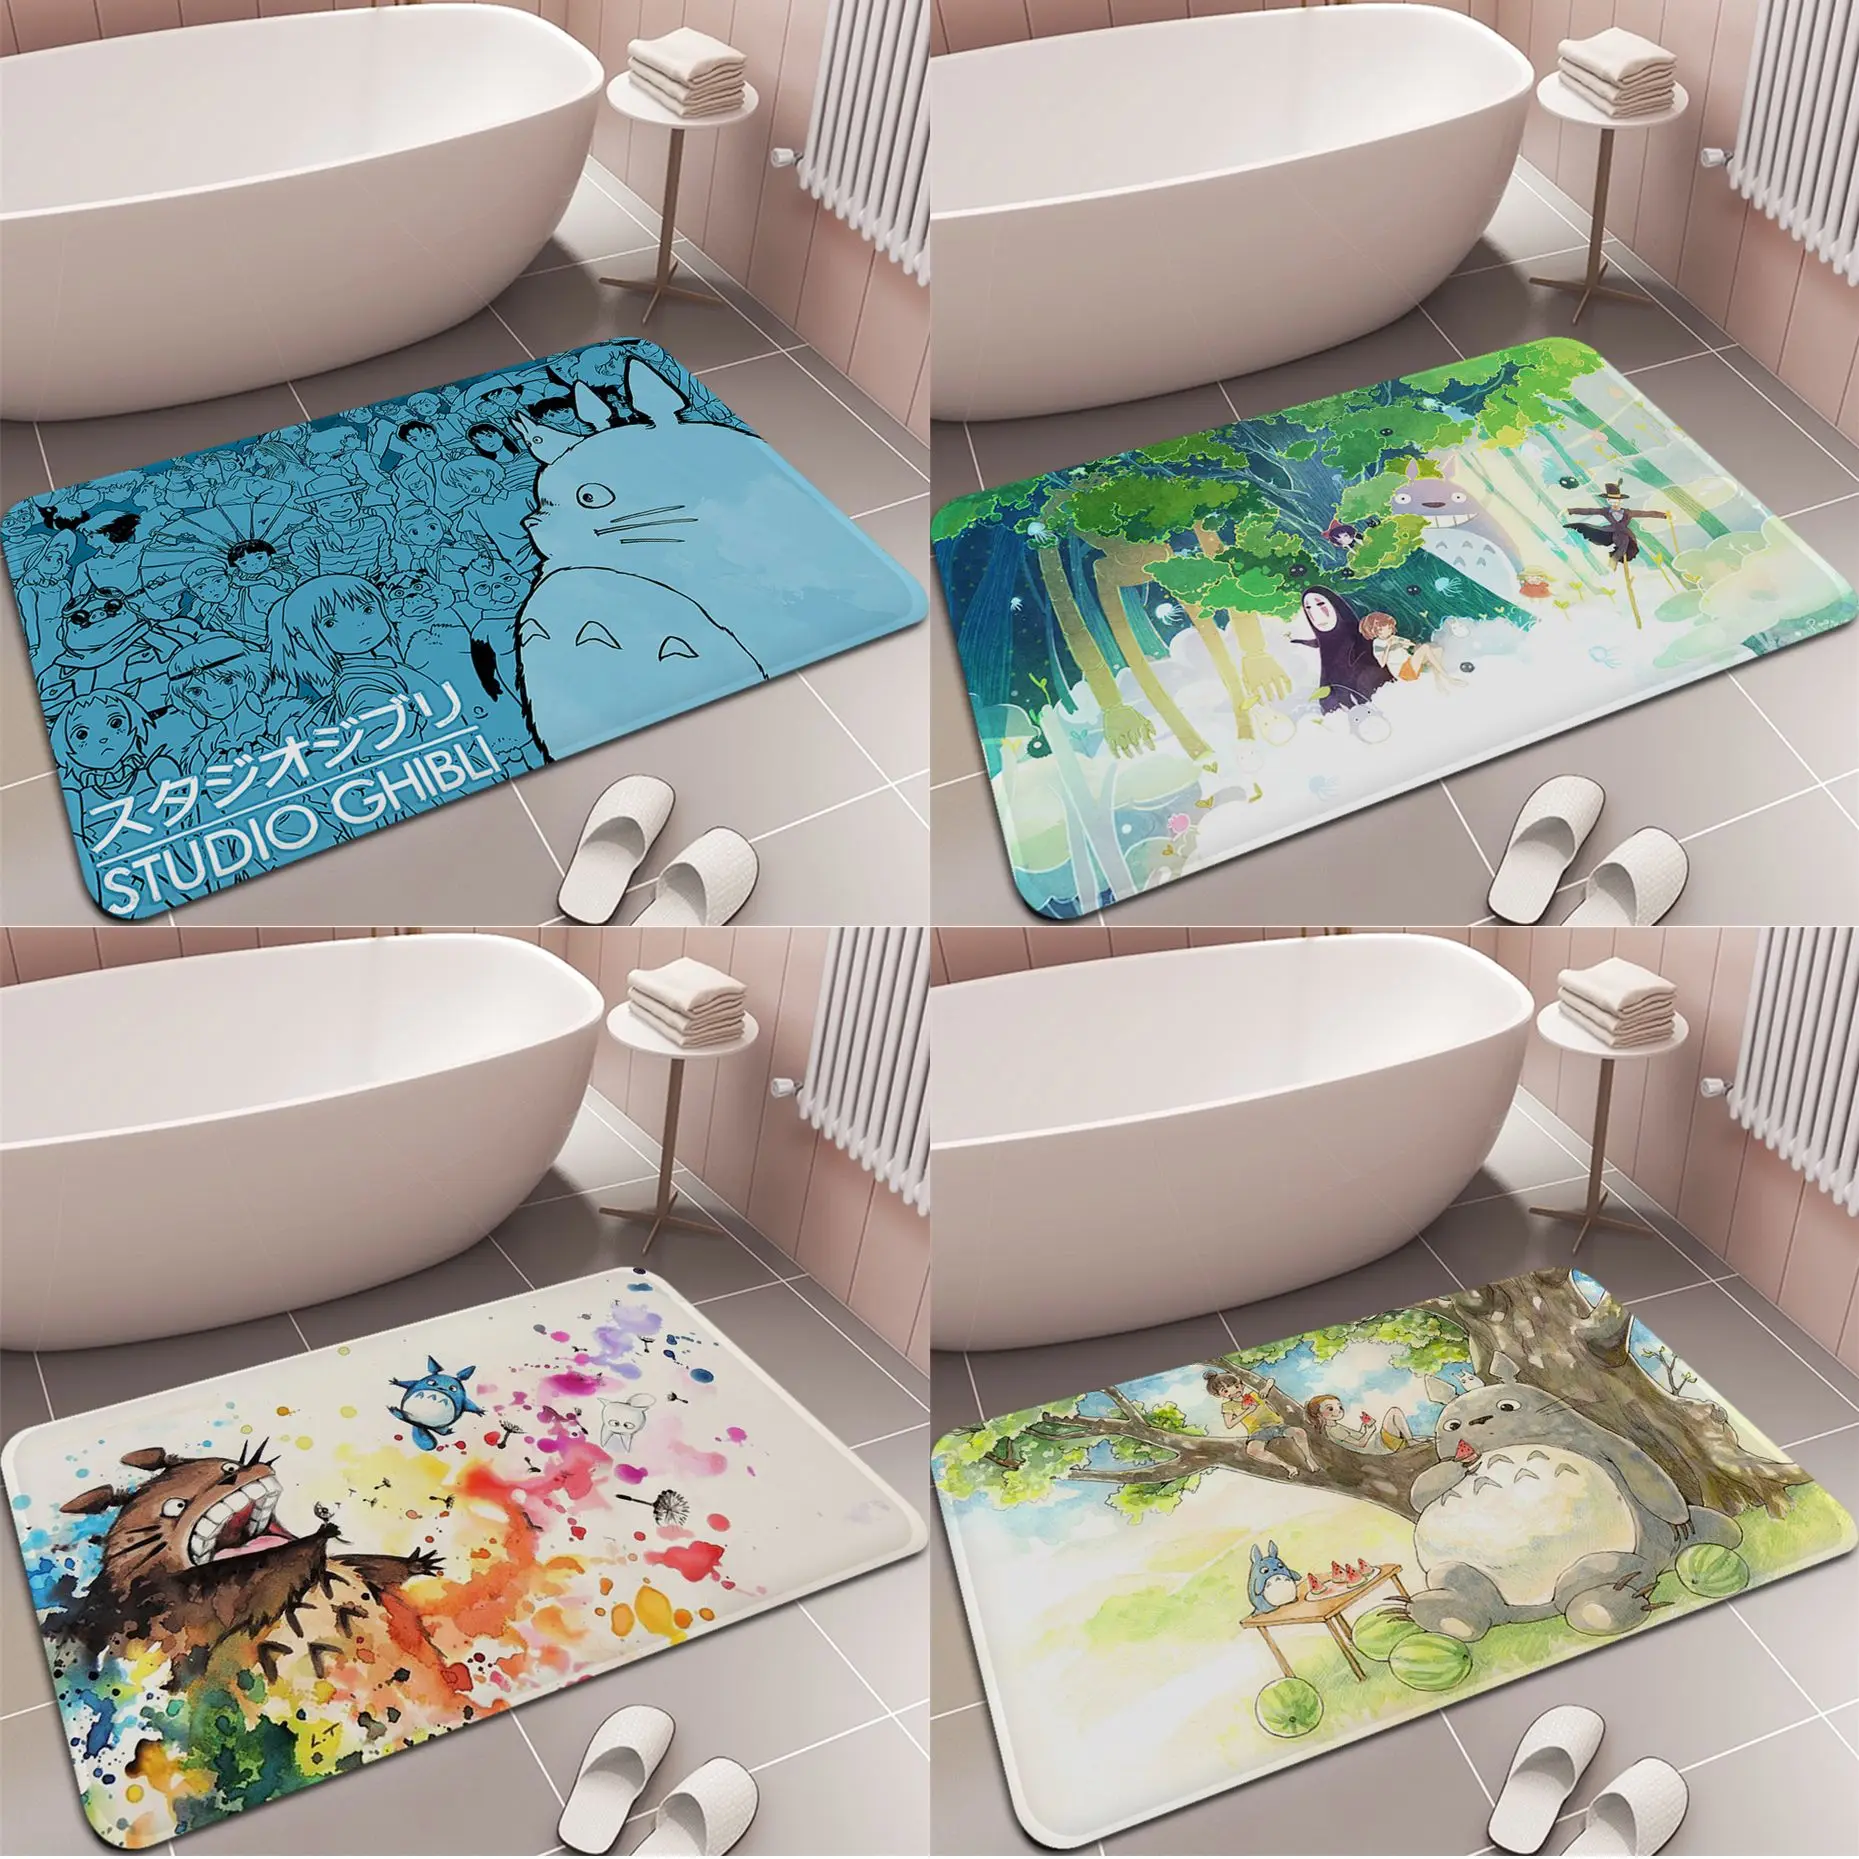 

Totoro Studio Ghibli Floor Mat Bedroom Decor Carpet Fashion Rectangular Mats Entrance Doormats Washable Kitchen Floor Bathroom